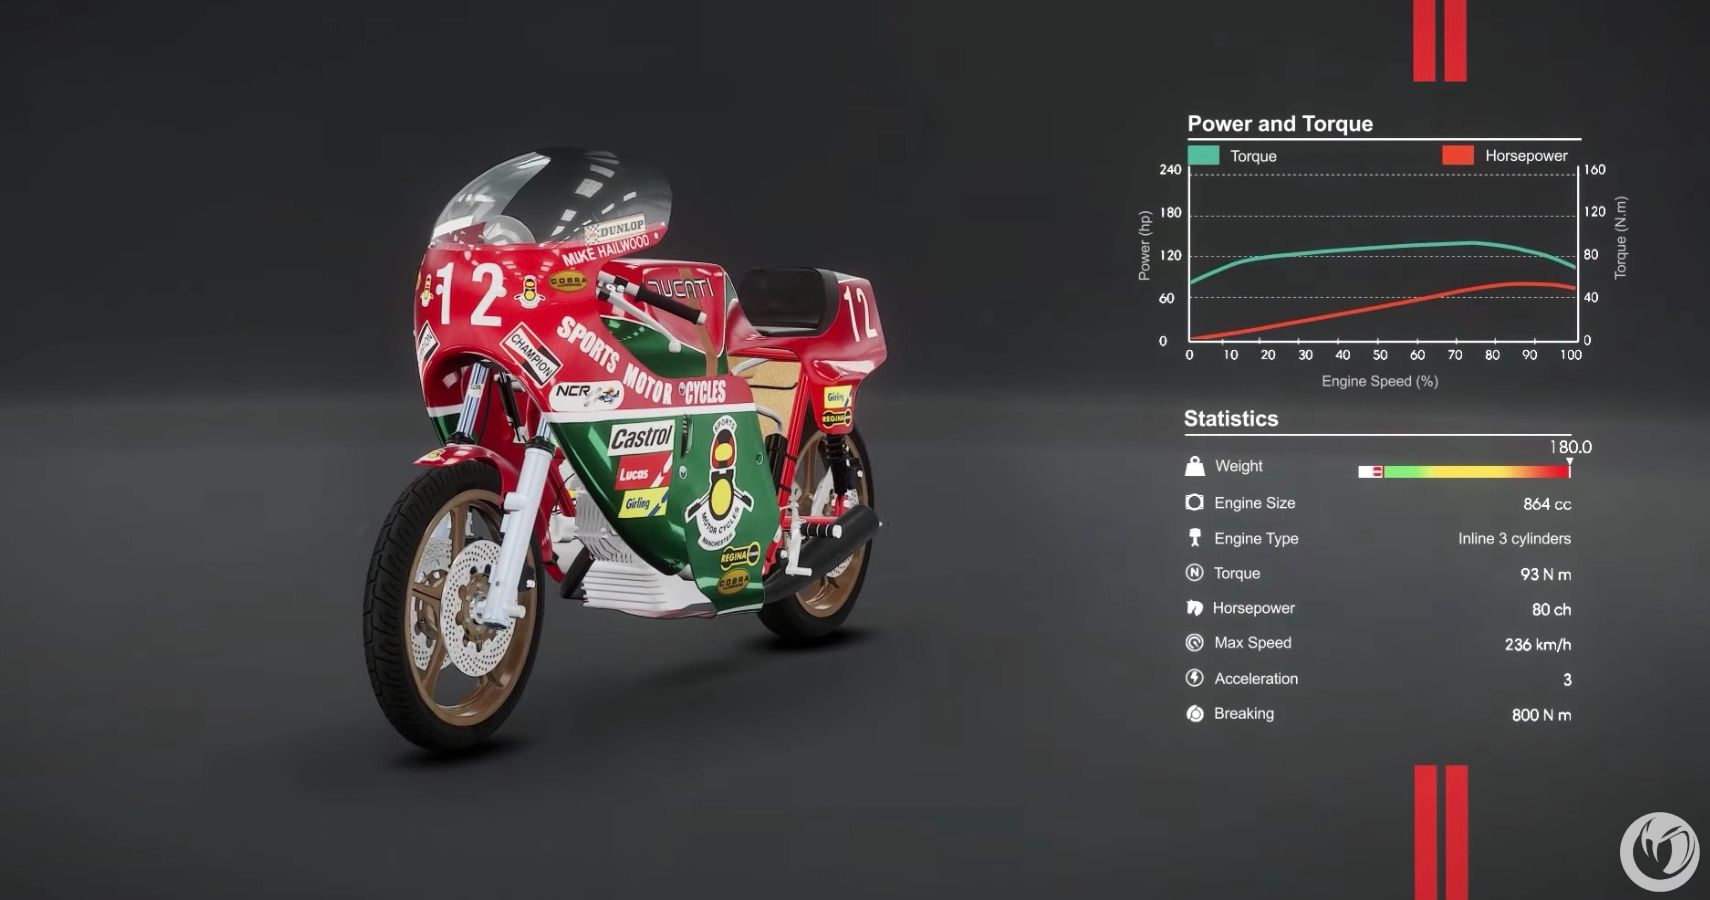 A Ducotti motorcycle alongside its stats profile.